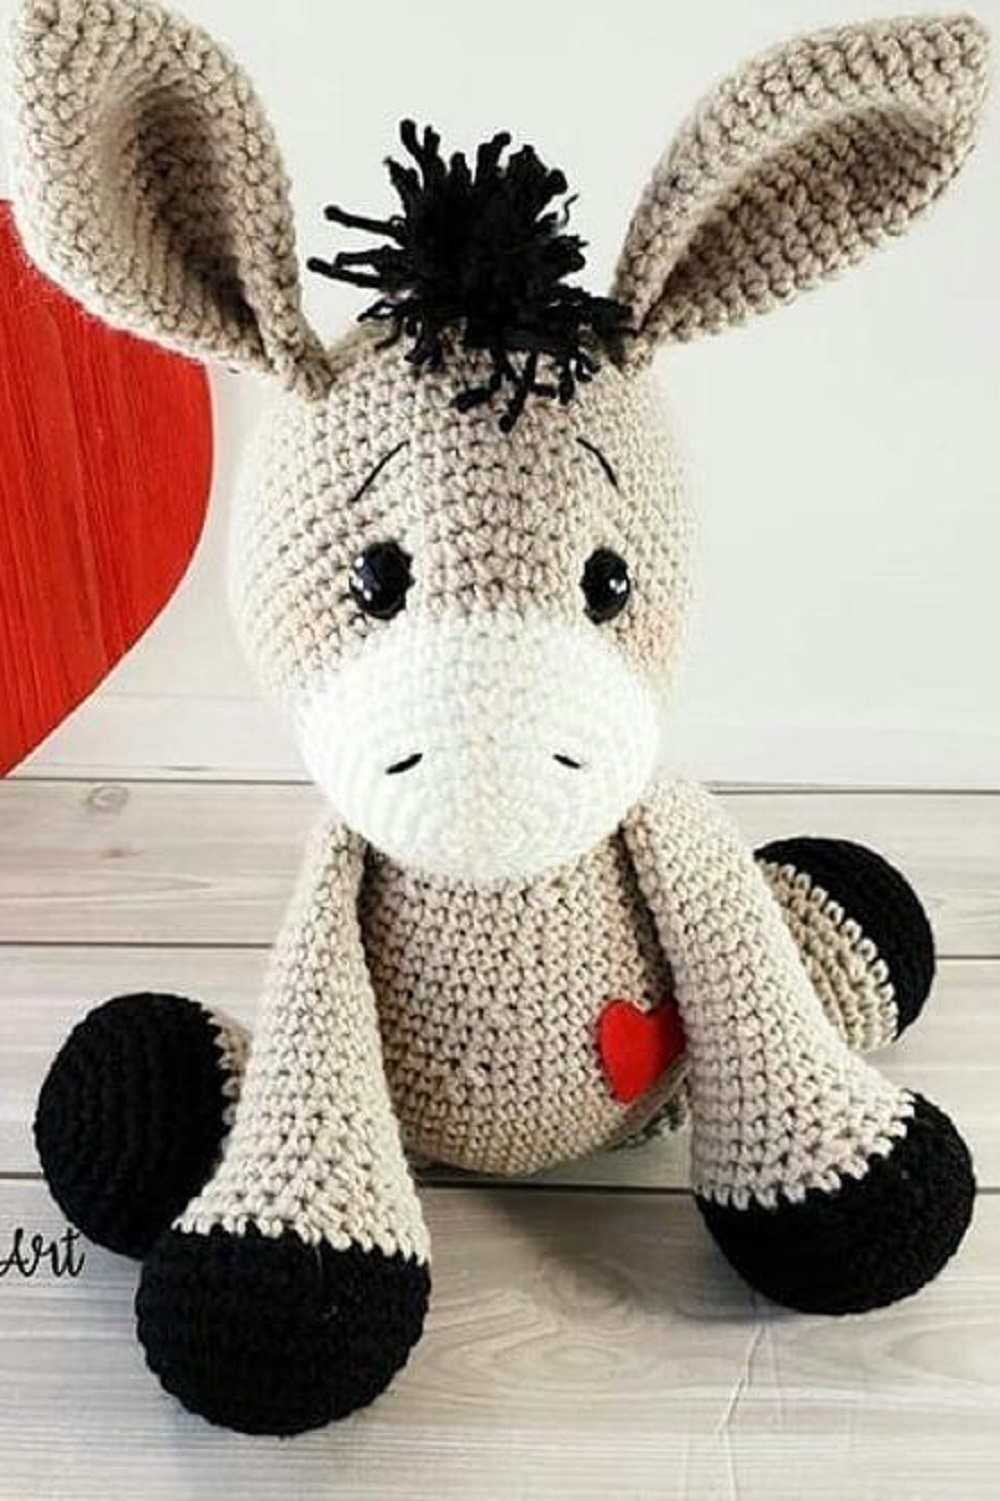 Amigurumi – the art of cute crochet animals